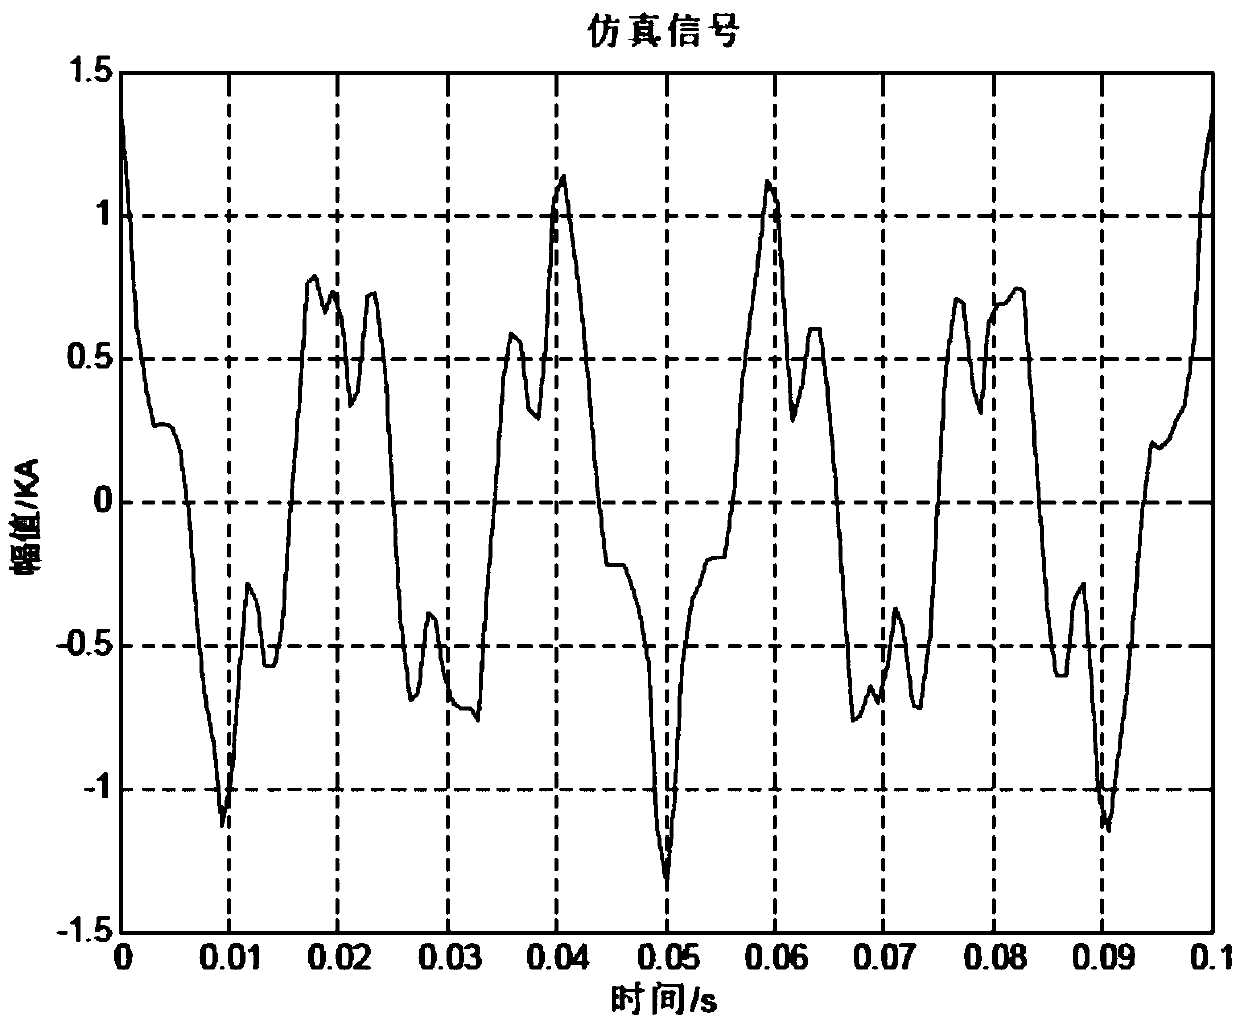 A power signal disturbance analysis method based on TLS-ESPRIT